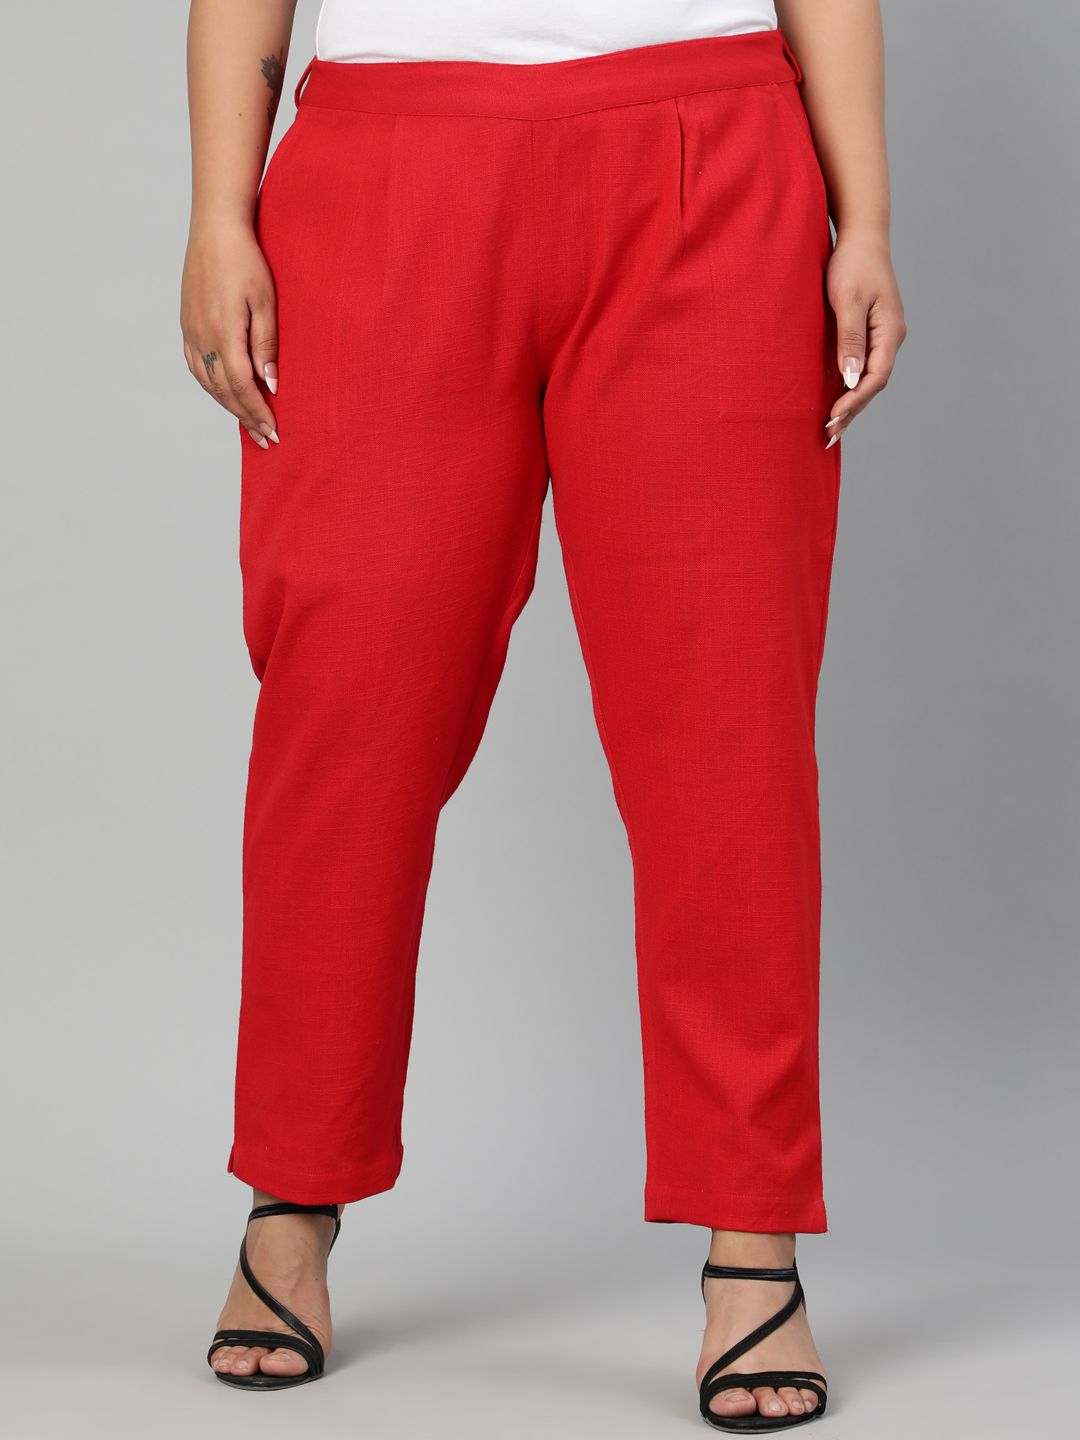 Shop Red Ethnic Wear Cotton Slub Pants